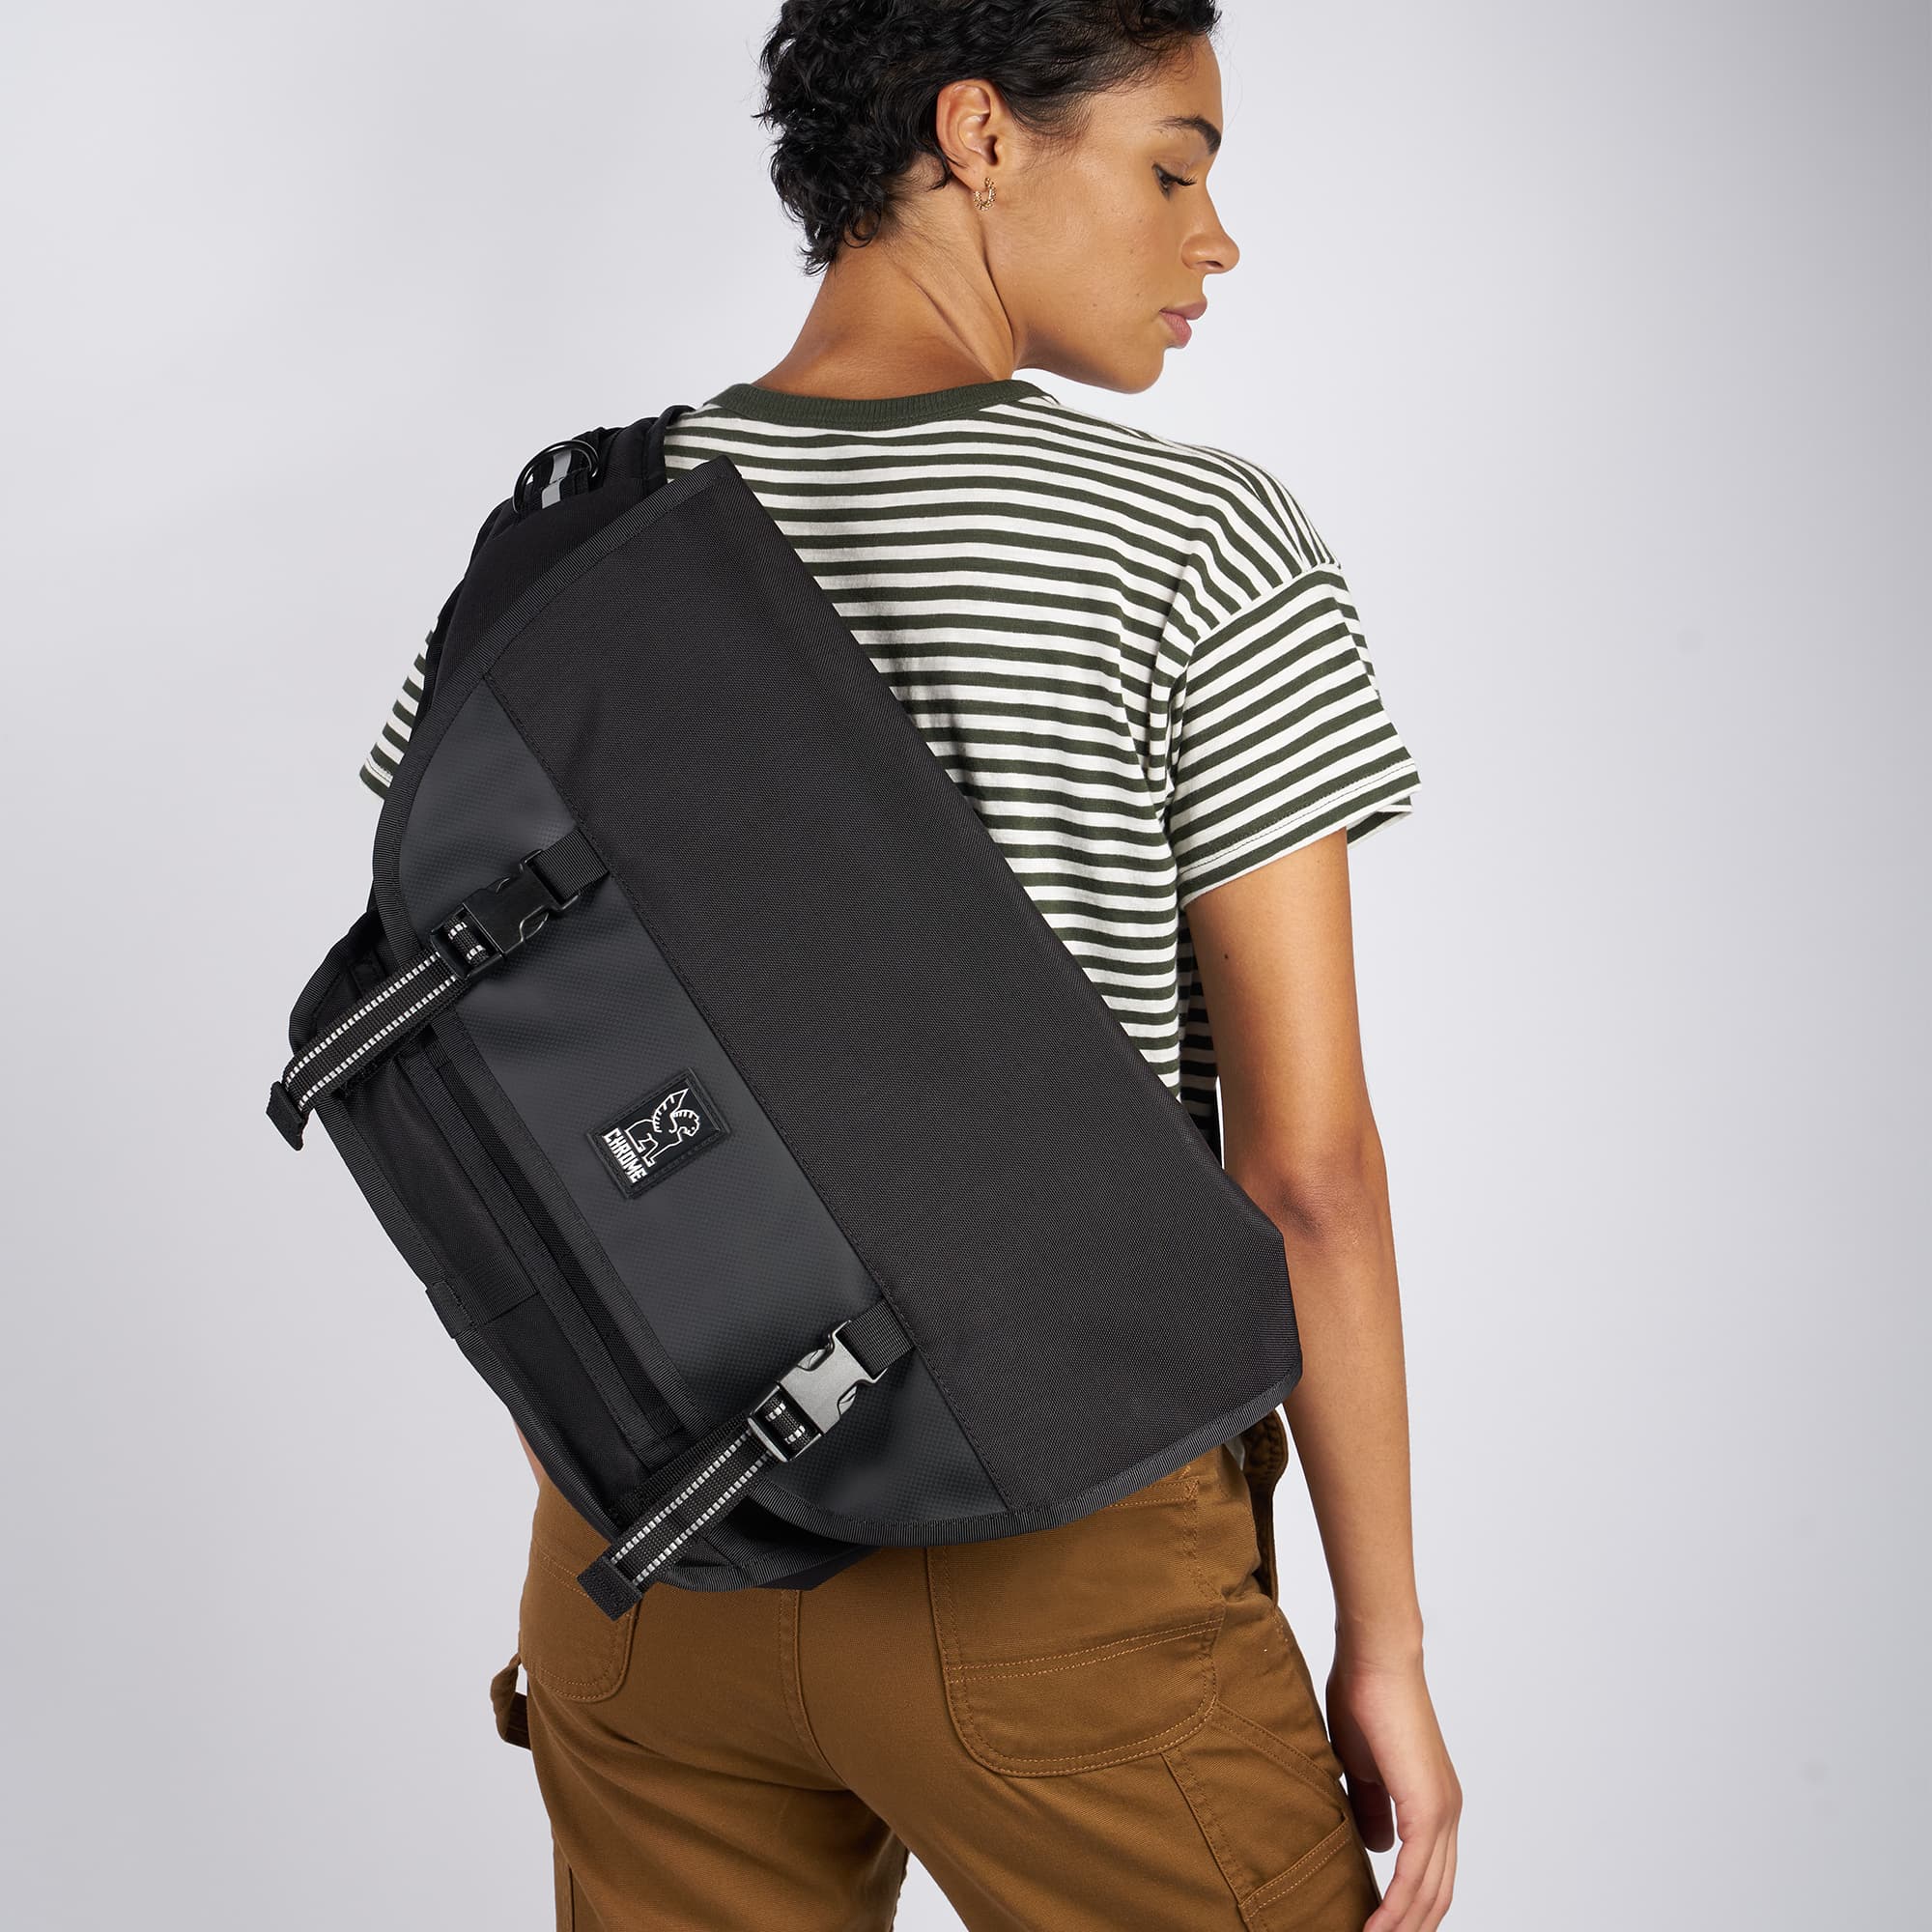 Chrome Industries Buran III Messenger Bag - 17 Laptop Sling Bag, Seat  Belt Buckle, Water Resistant, 24 Liter